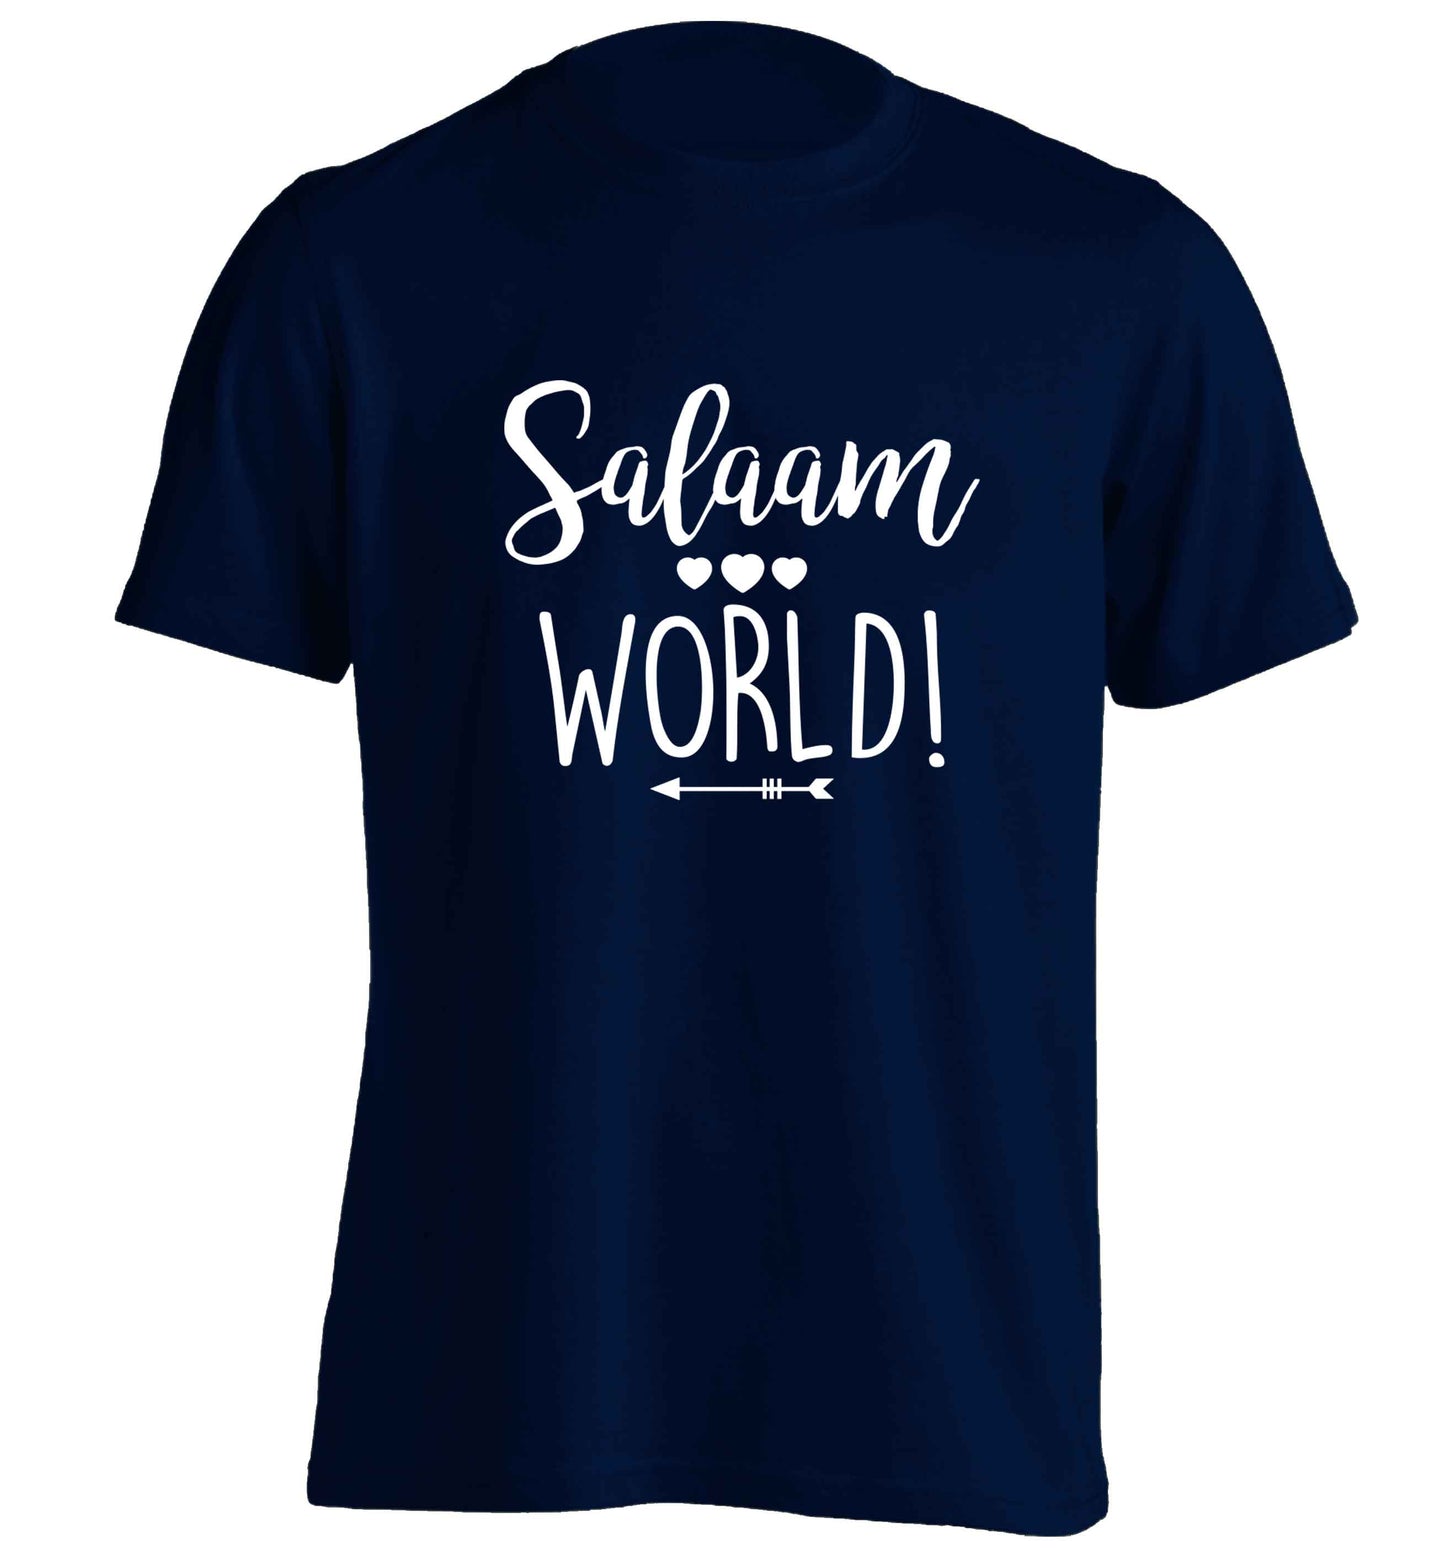 Salaam world adults unisex navy Tshirt 2XL